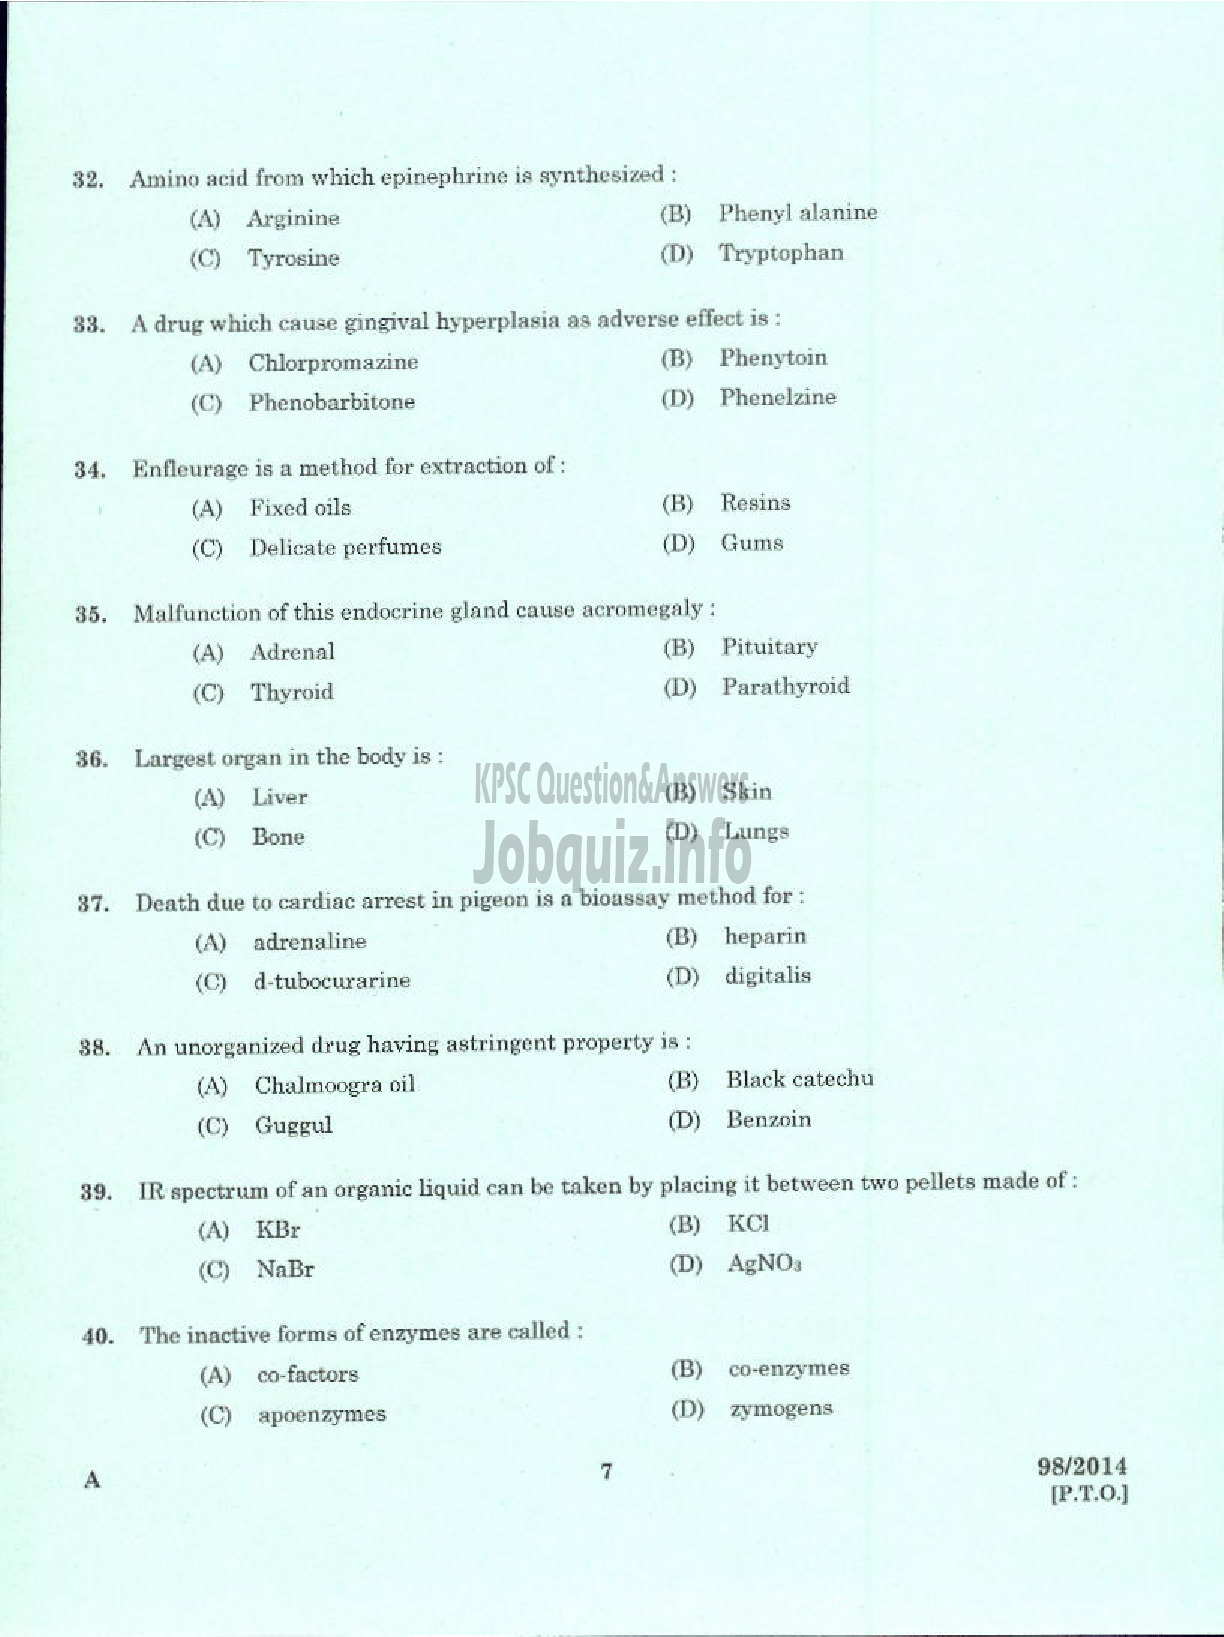 Kerala PSC Question Paper - PHARMA CHEMIST ANIMAL HUSBANDRY-5